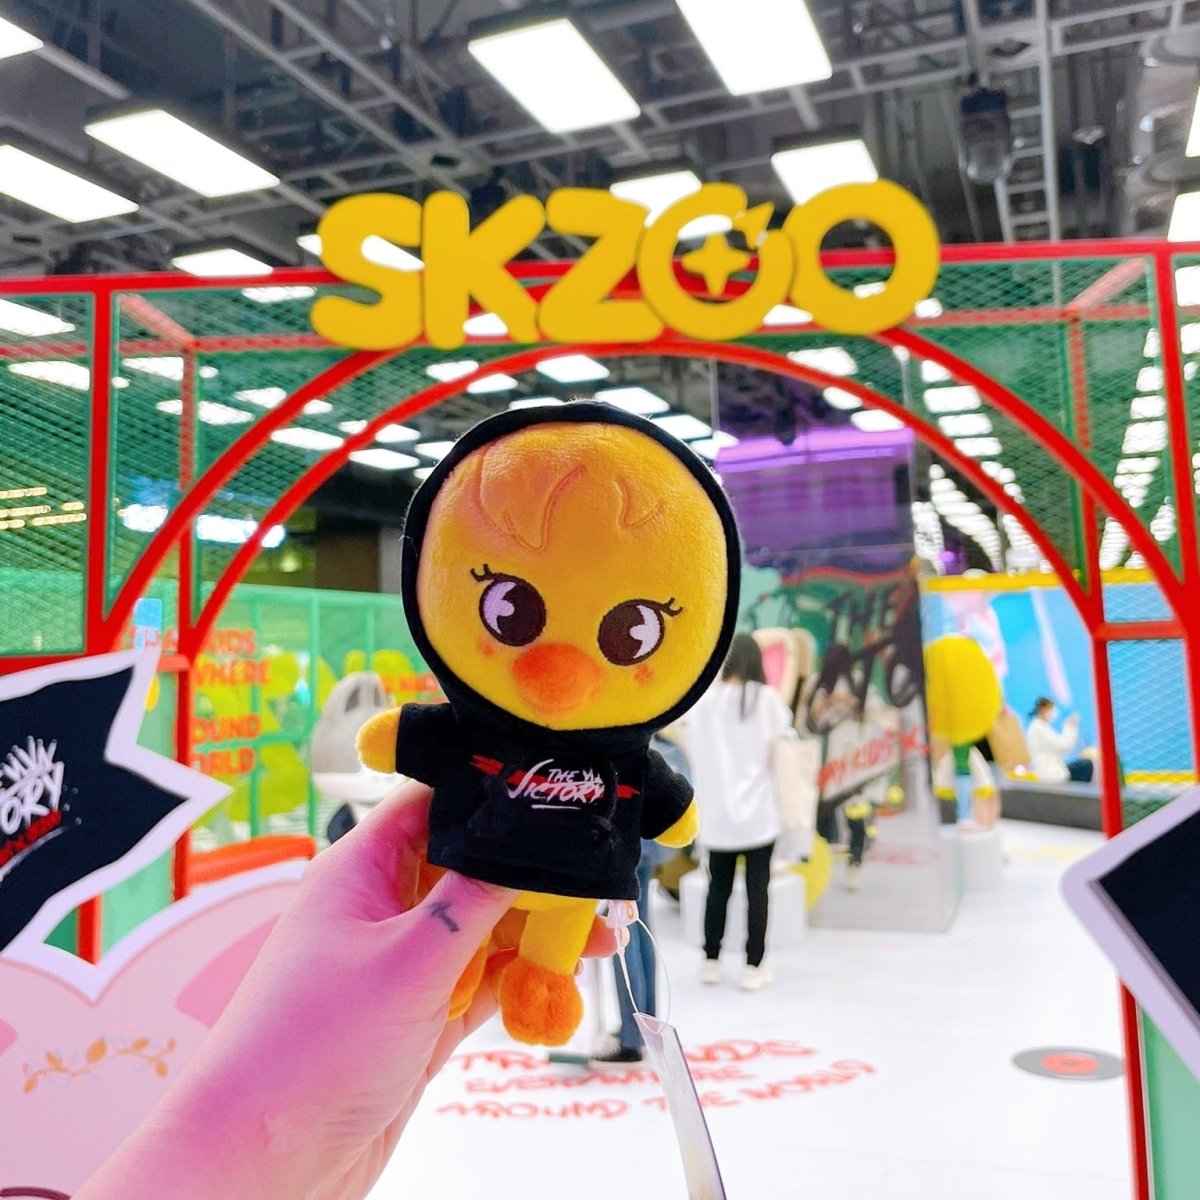  Qaedtls Kpop Stray Kids Skzoo Dolls Merch Skz Plush Toys Gift  for Kids Adults : Toys & Games